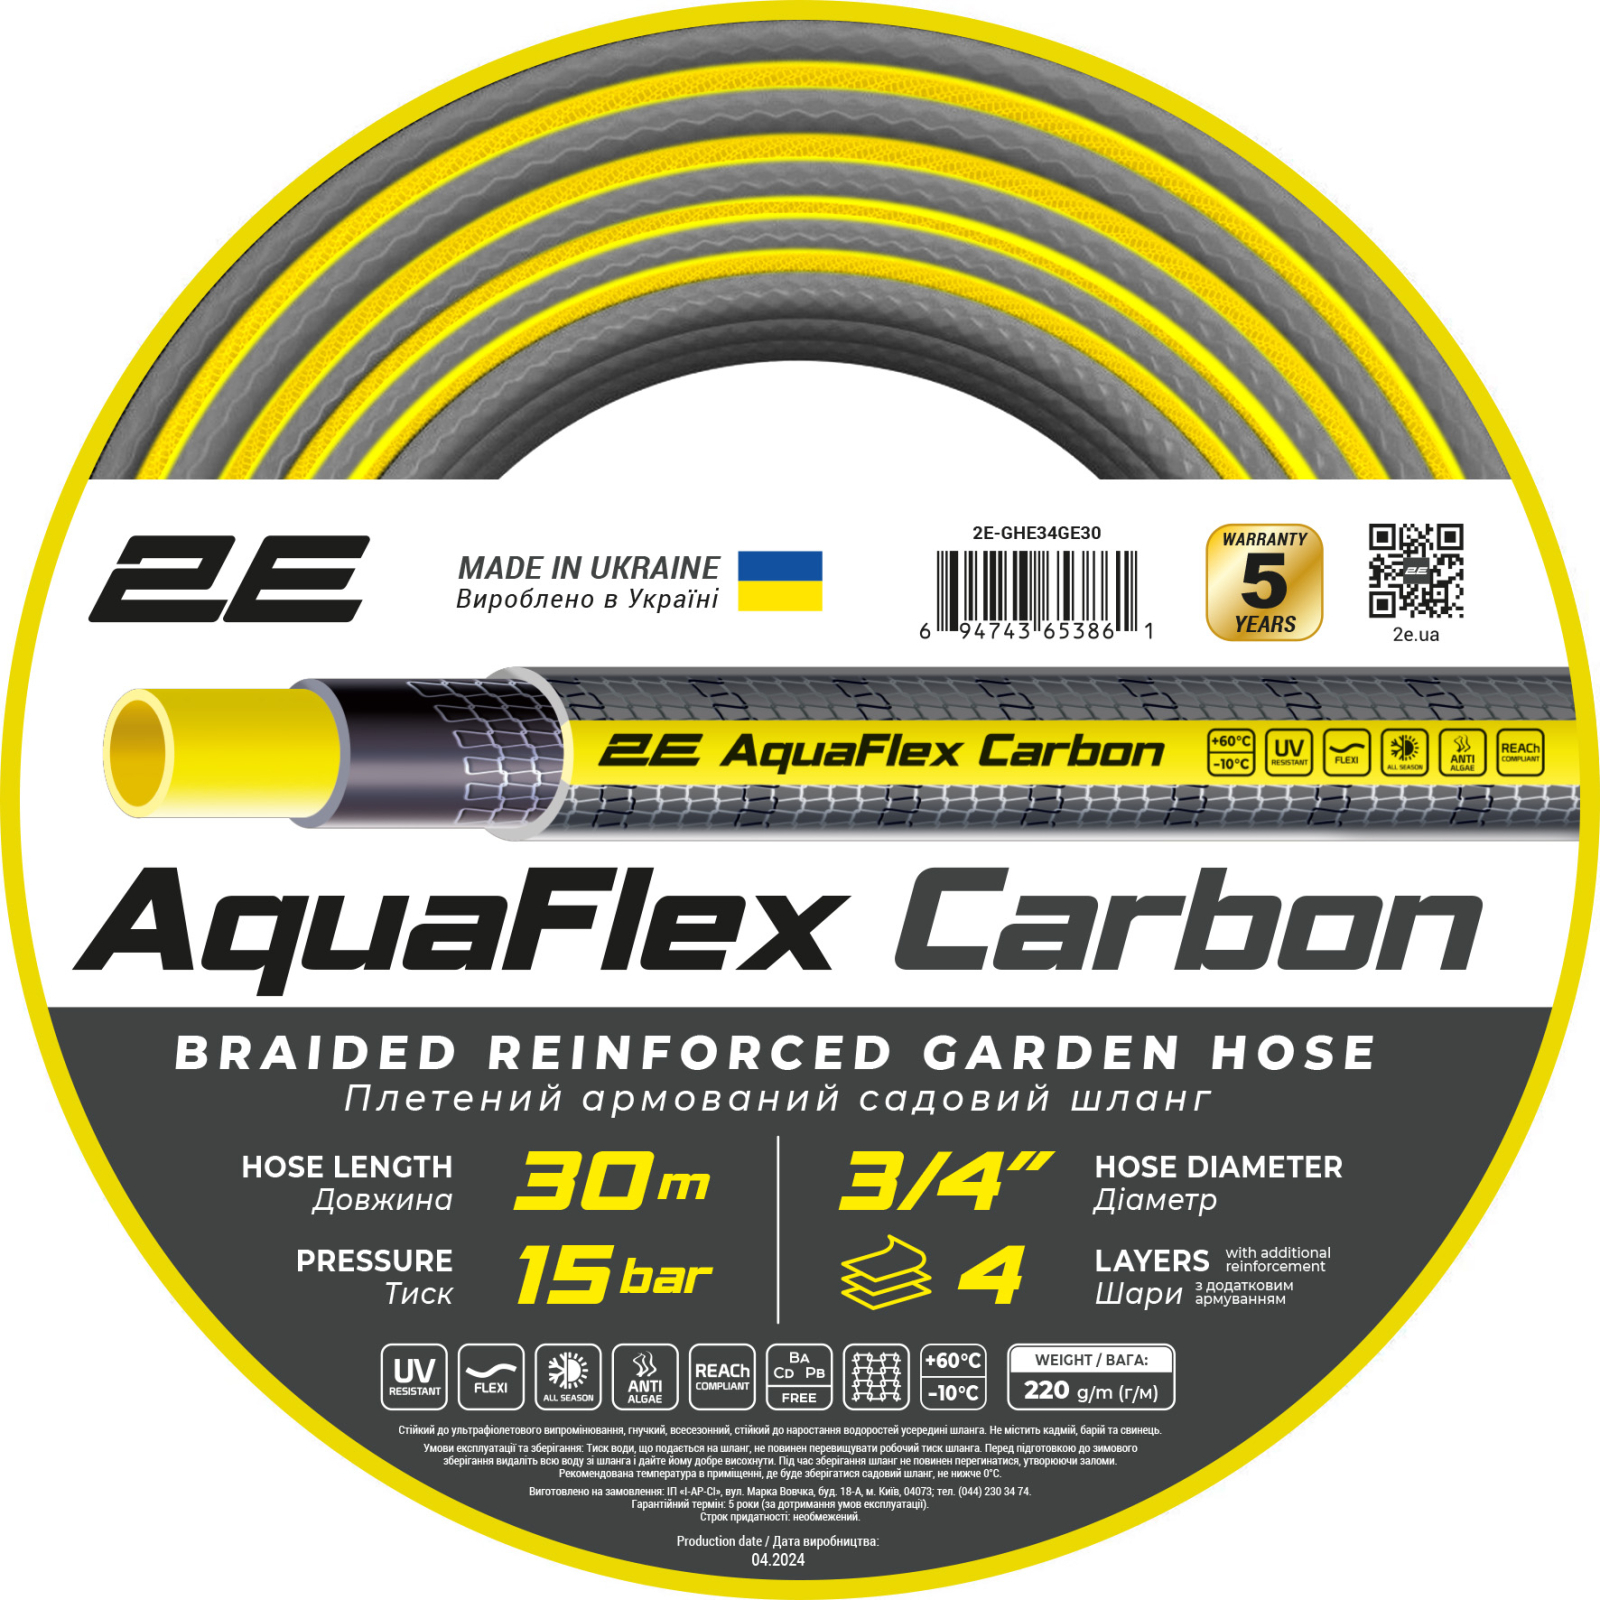 Поливочный шланг 2E AquaFlex Carbon 3/4", 30м, 4 шари, 20бар, -10+60°C (2E-GHE34GE30)